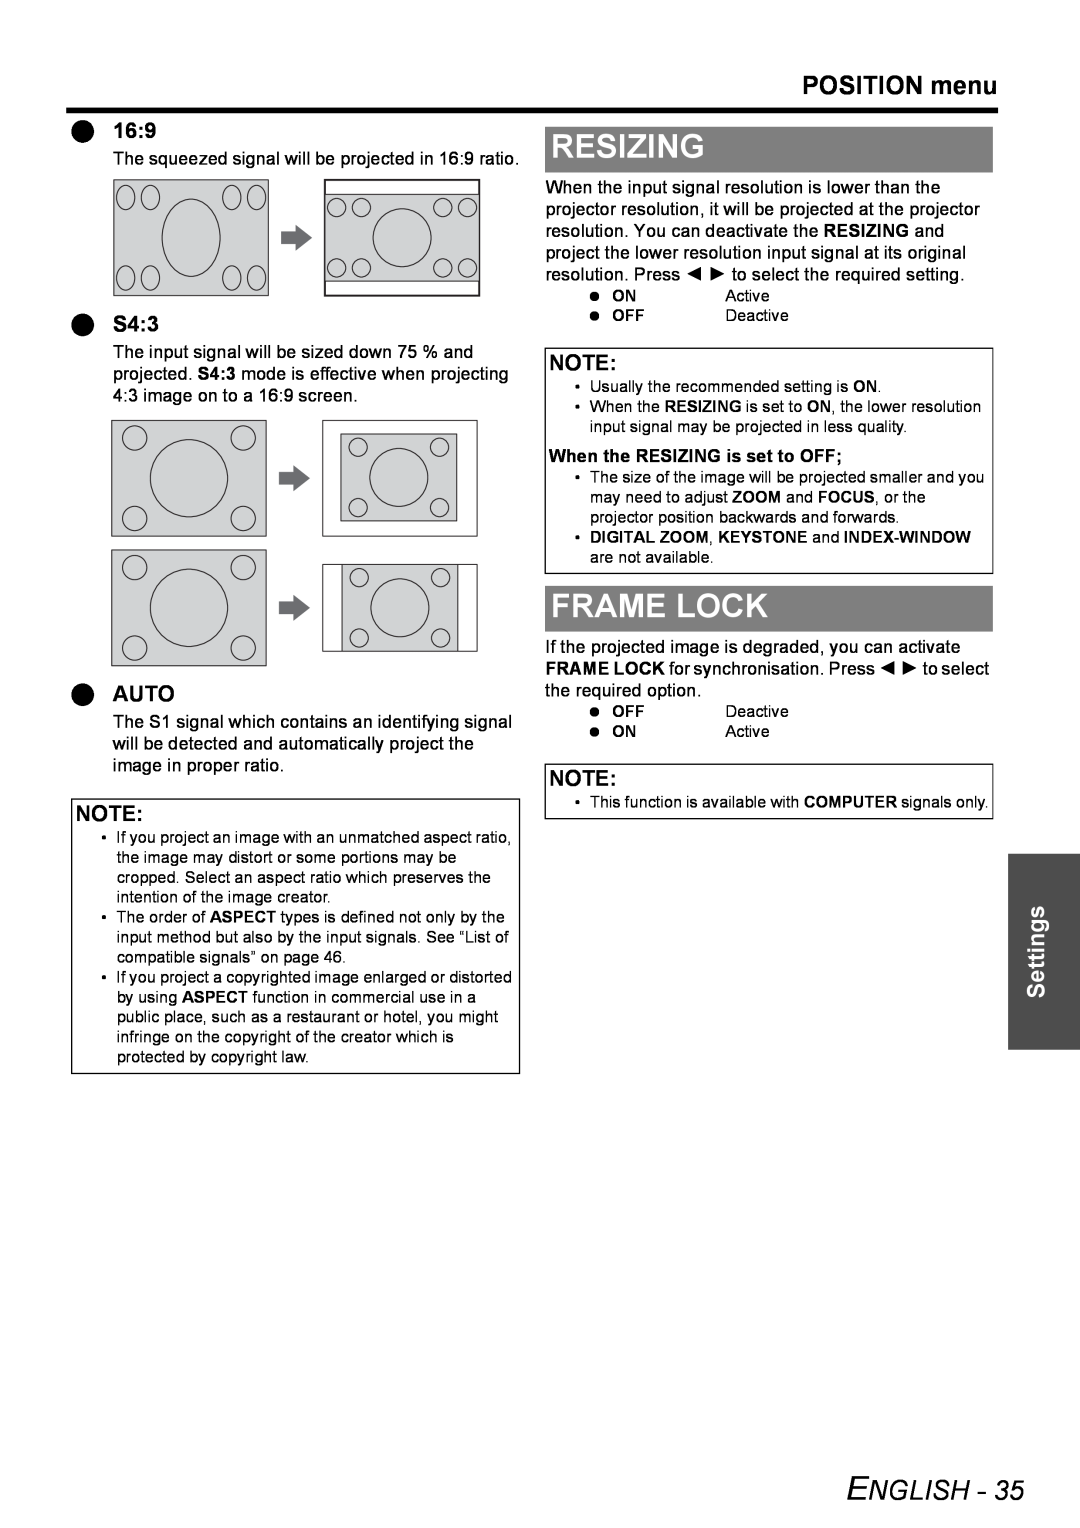 Philips PT-F100NTE manual Resizing, Frame Lock, POSITION menu, English, Settings, Auto 